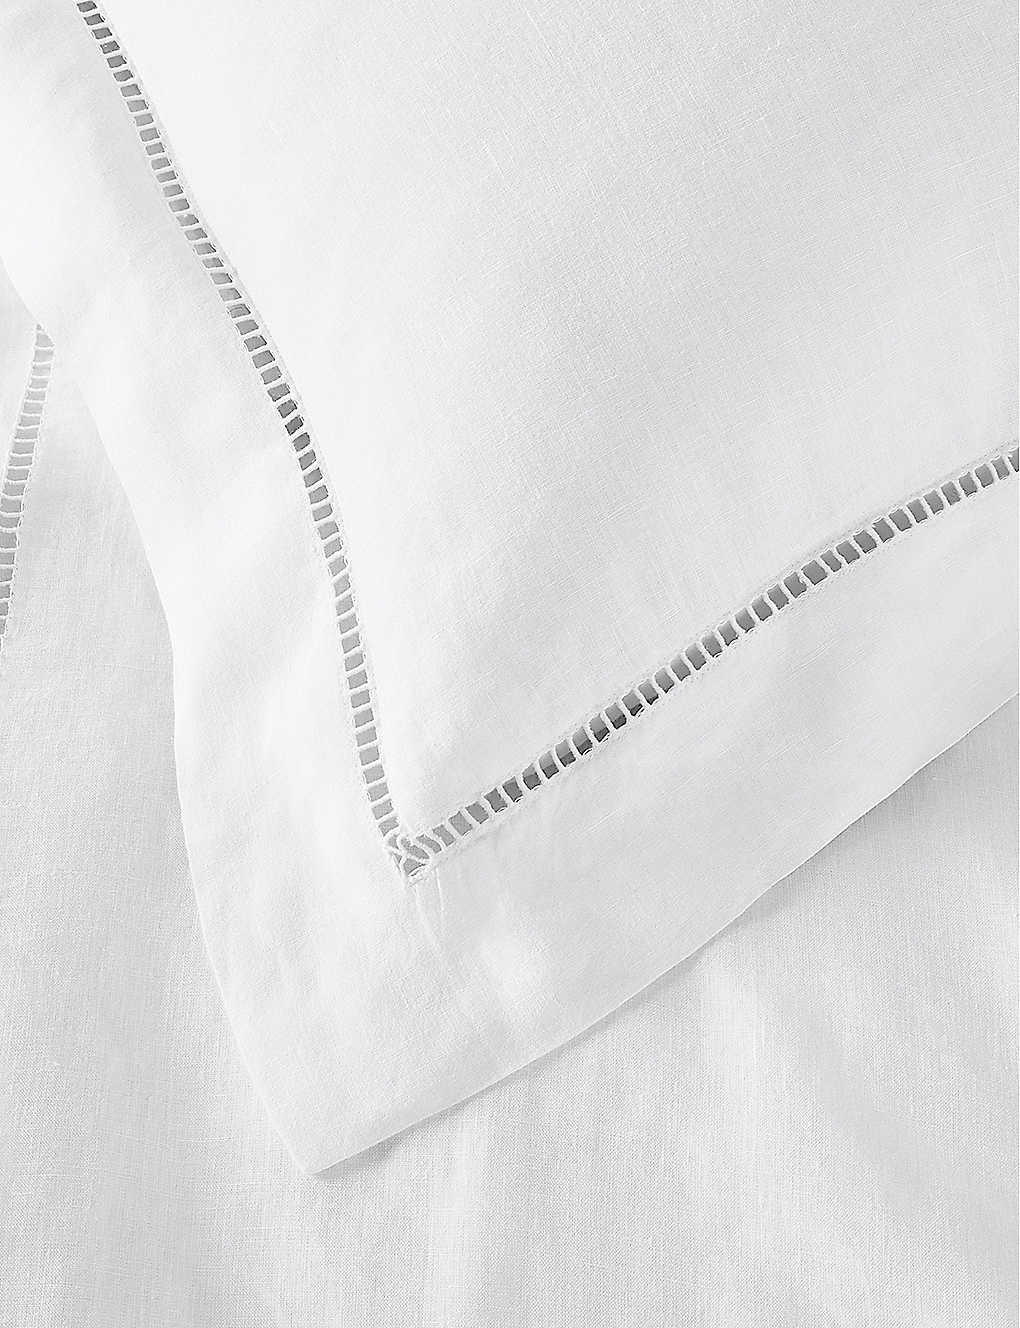 THE WHITE COMPANY サントリーニ スクエア リネン オックスフォード ピローケース 65×65cm Santorini square linen Oxford pillowcase 65cm x 65cm WHITE